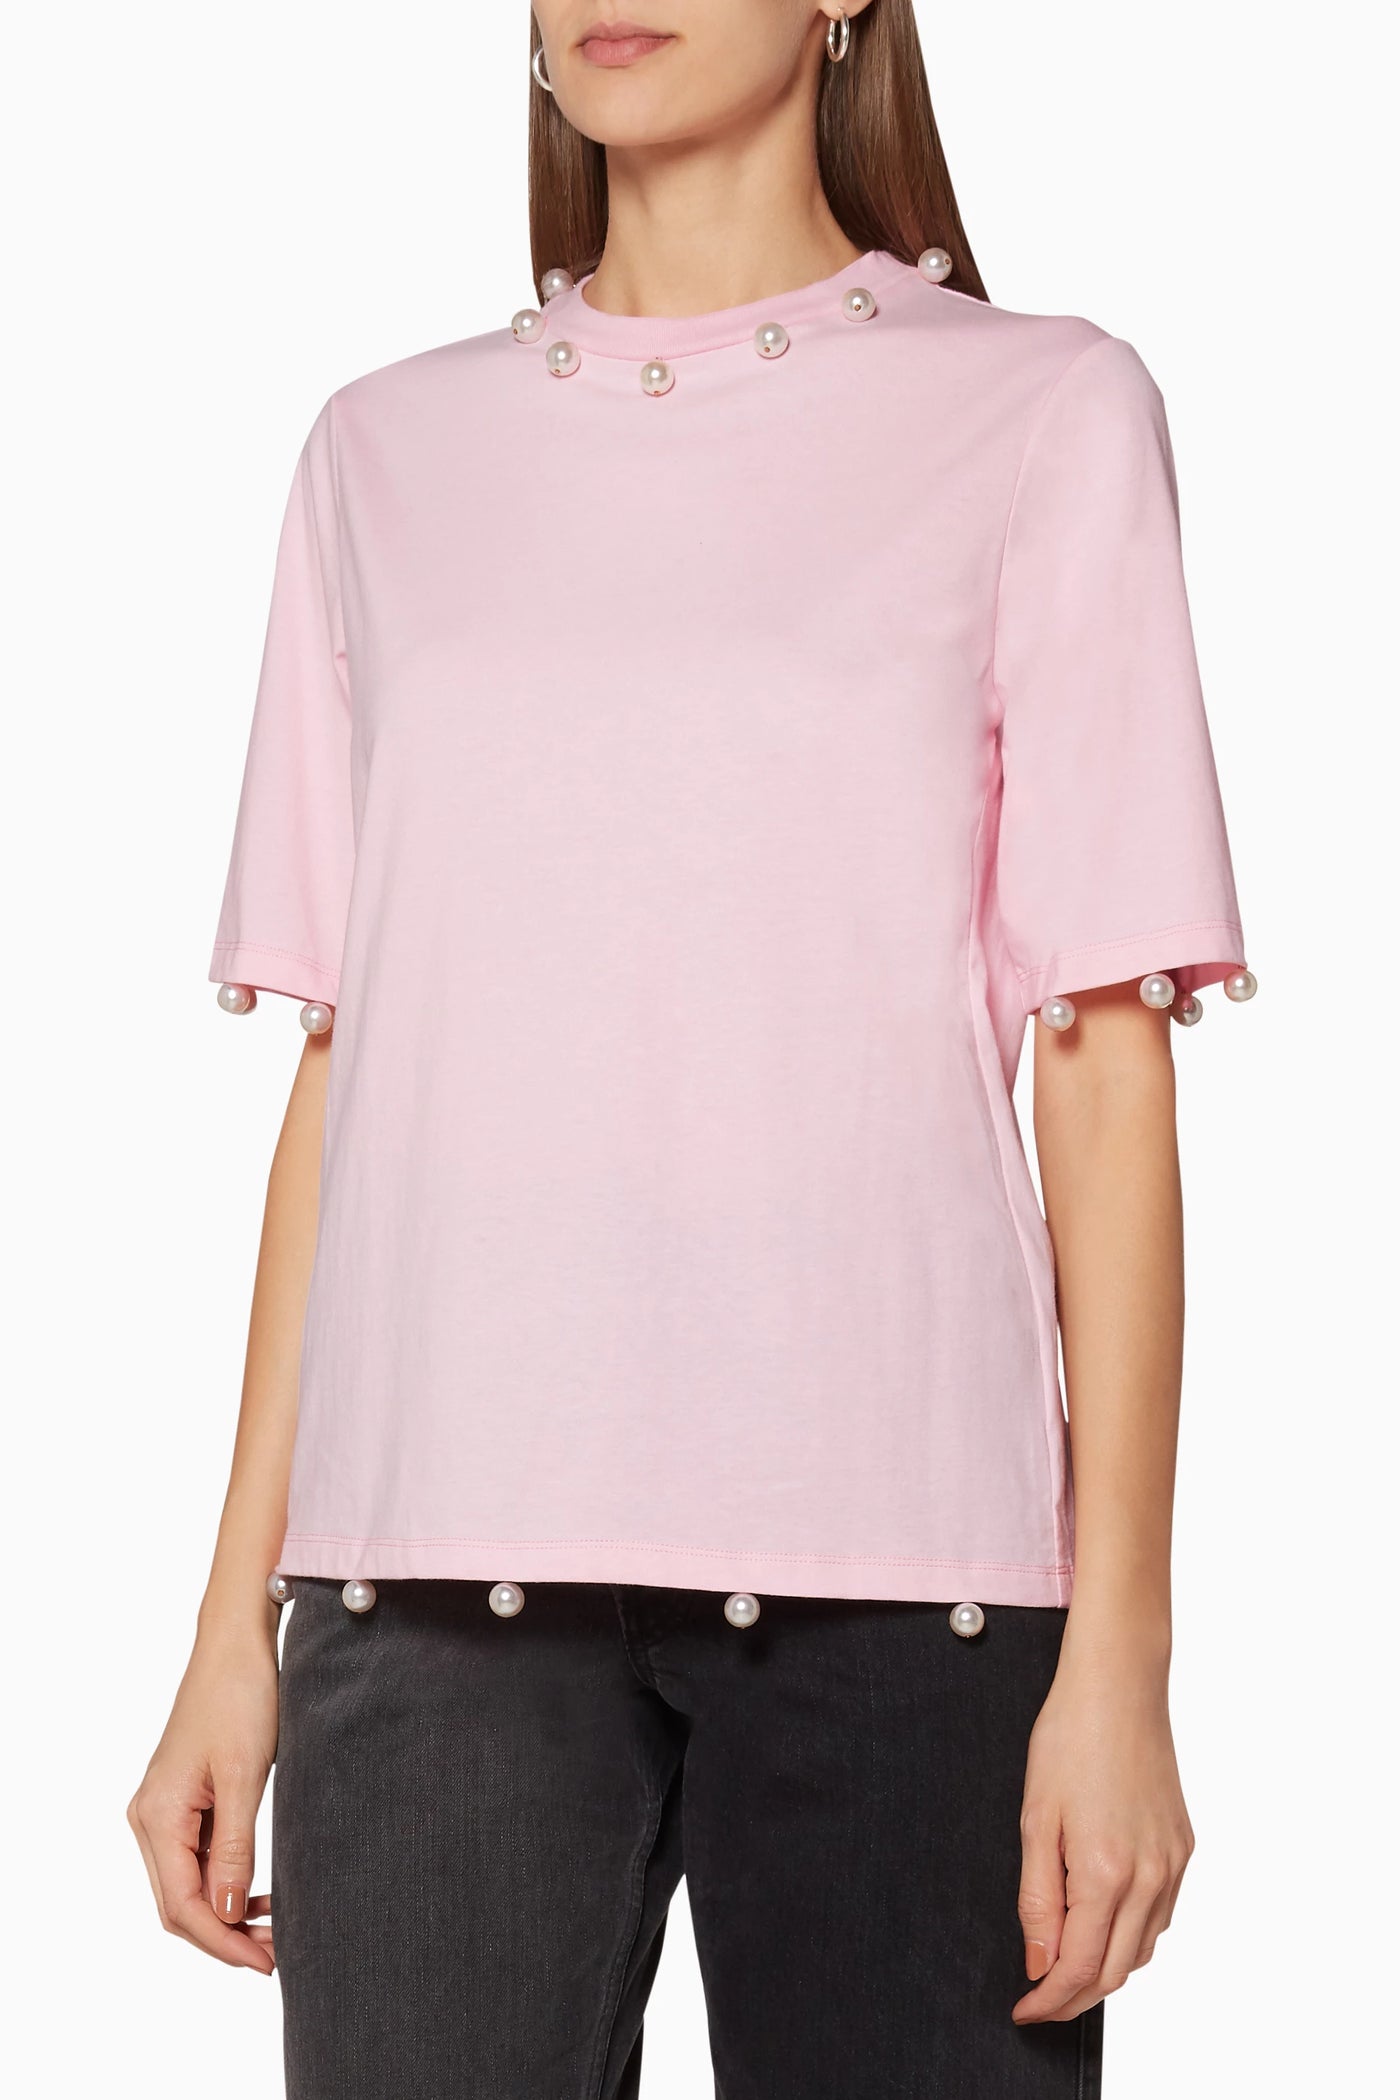 Romance Was Born Light-Pink Angel Dribble T-Shirt, Size 10